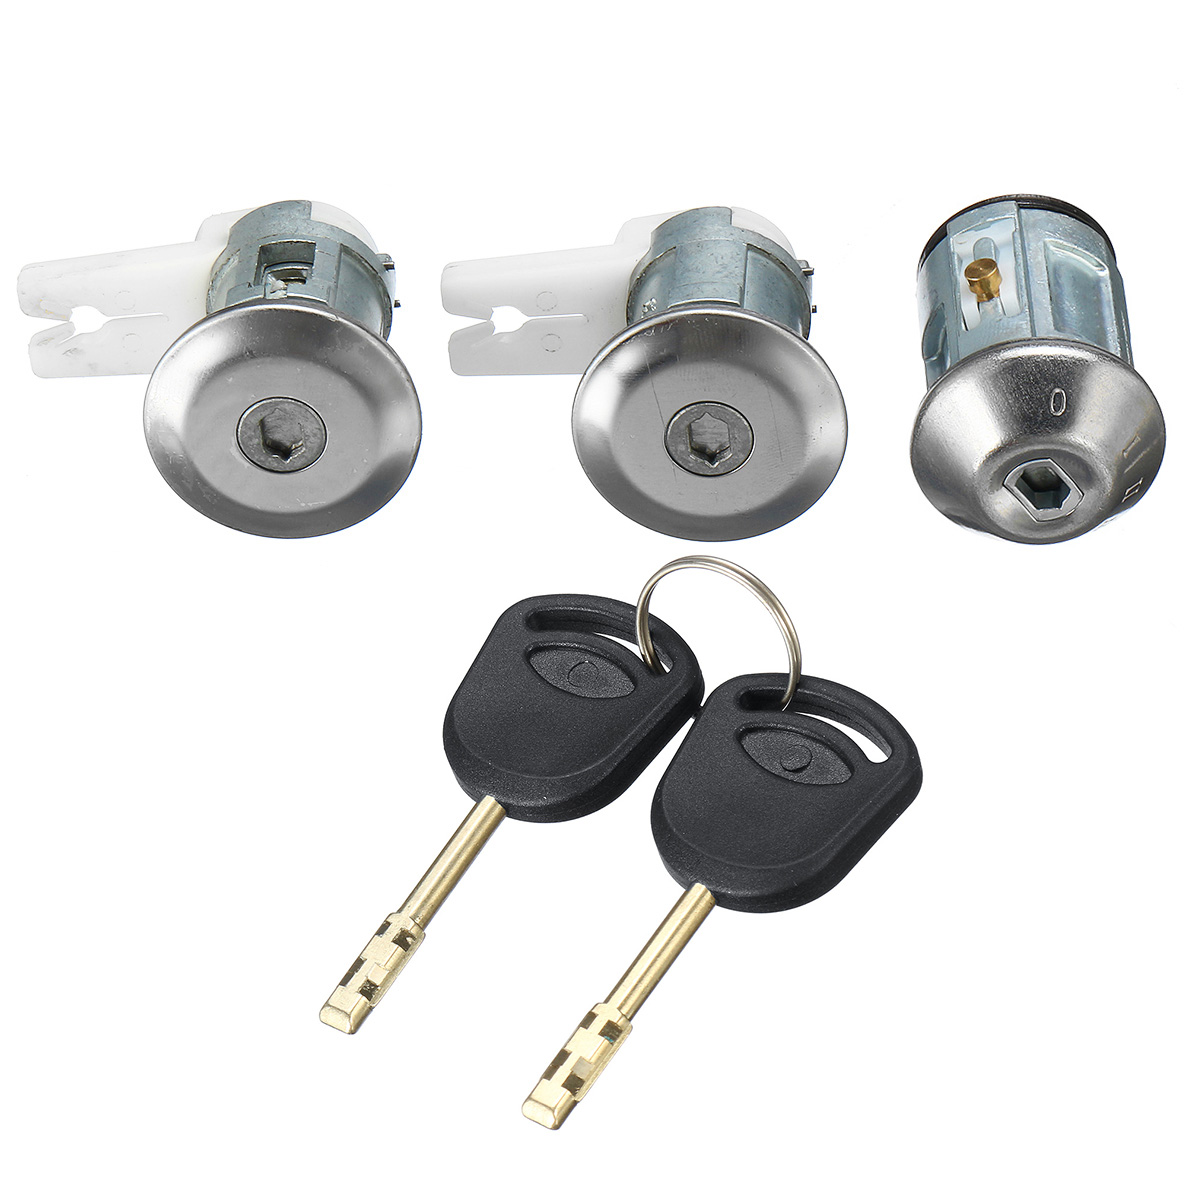 

Door Lock Ignition Key Barrel w/ 2 Keys For FORD Falcon XG XH Ute Van 1993-1998